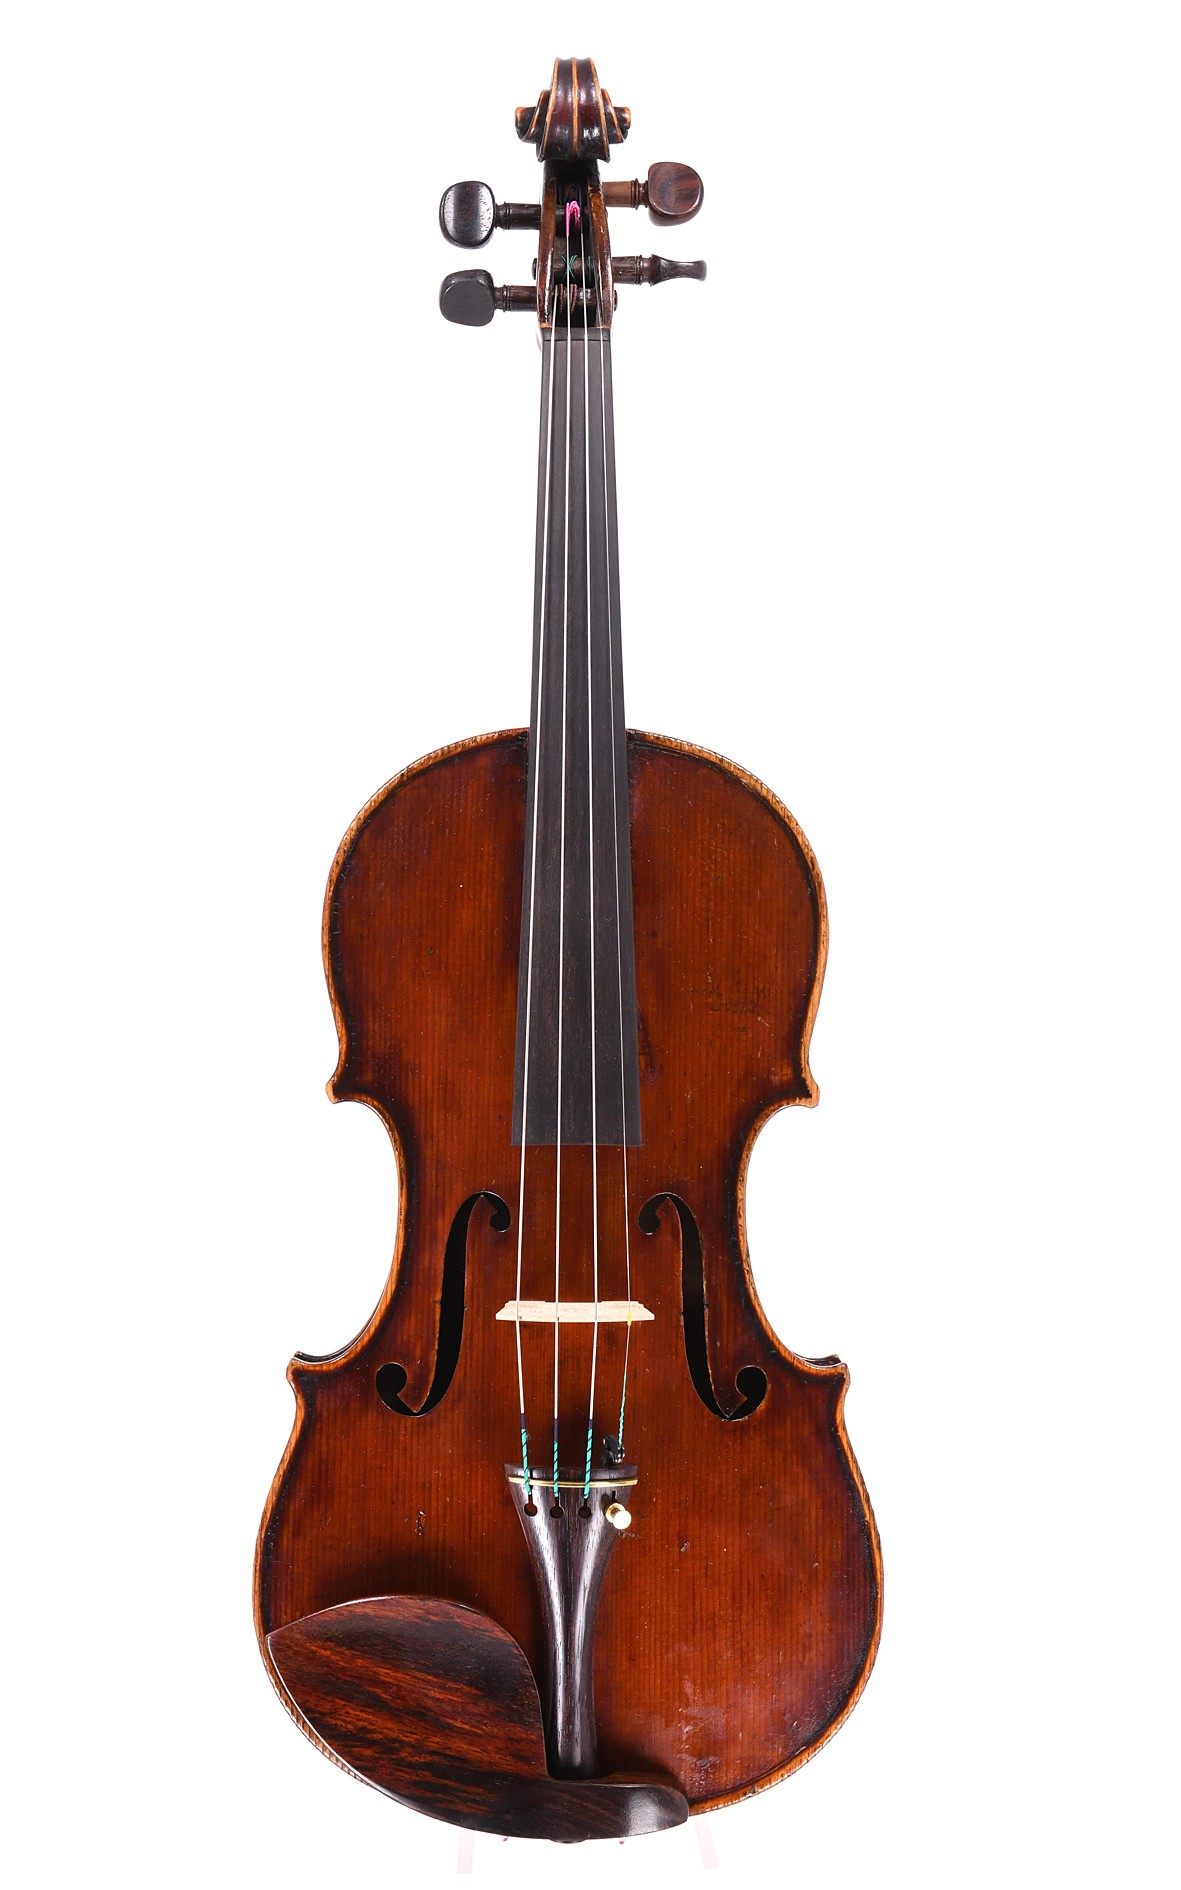 George Chanot jr., fine English violin, London